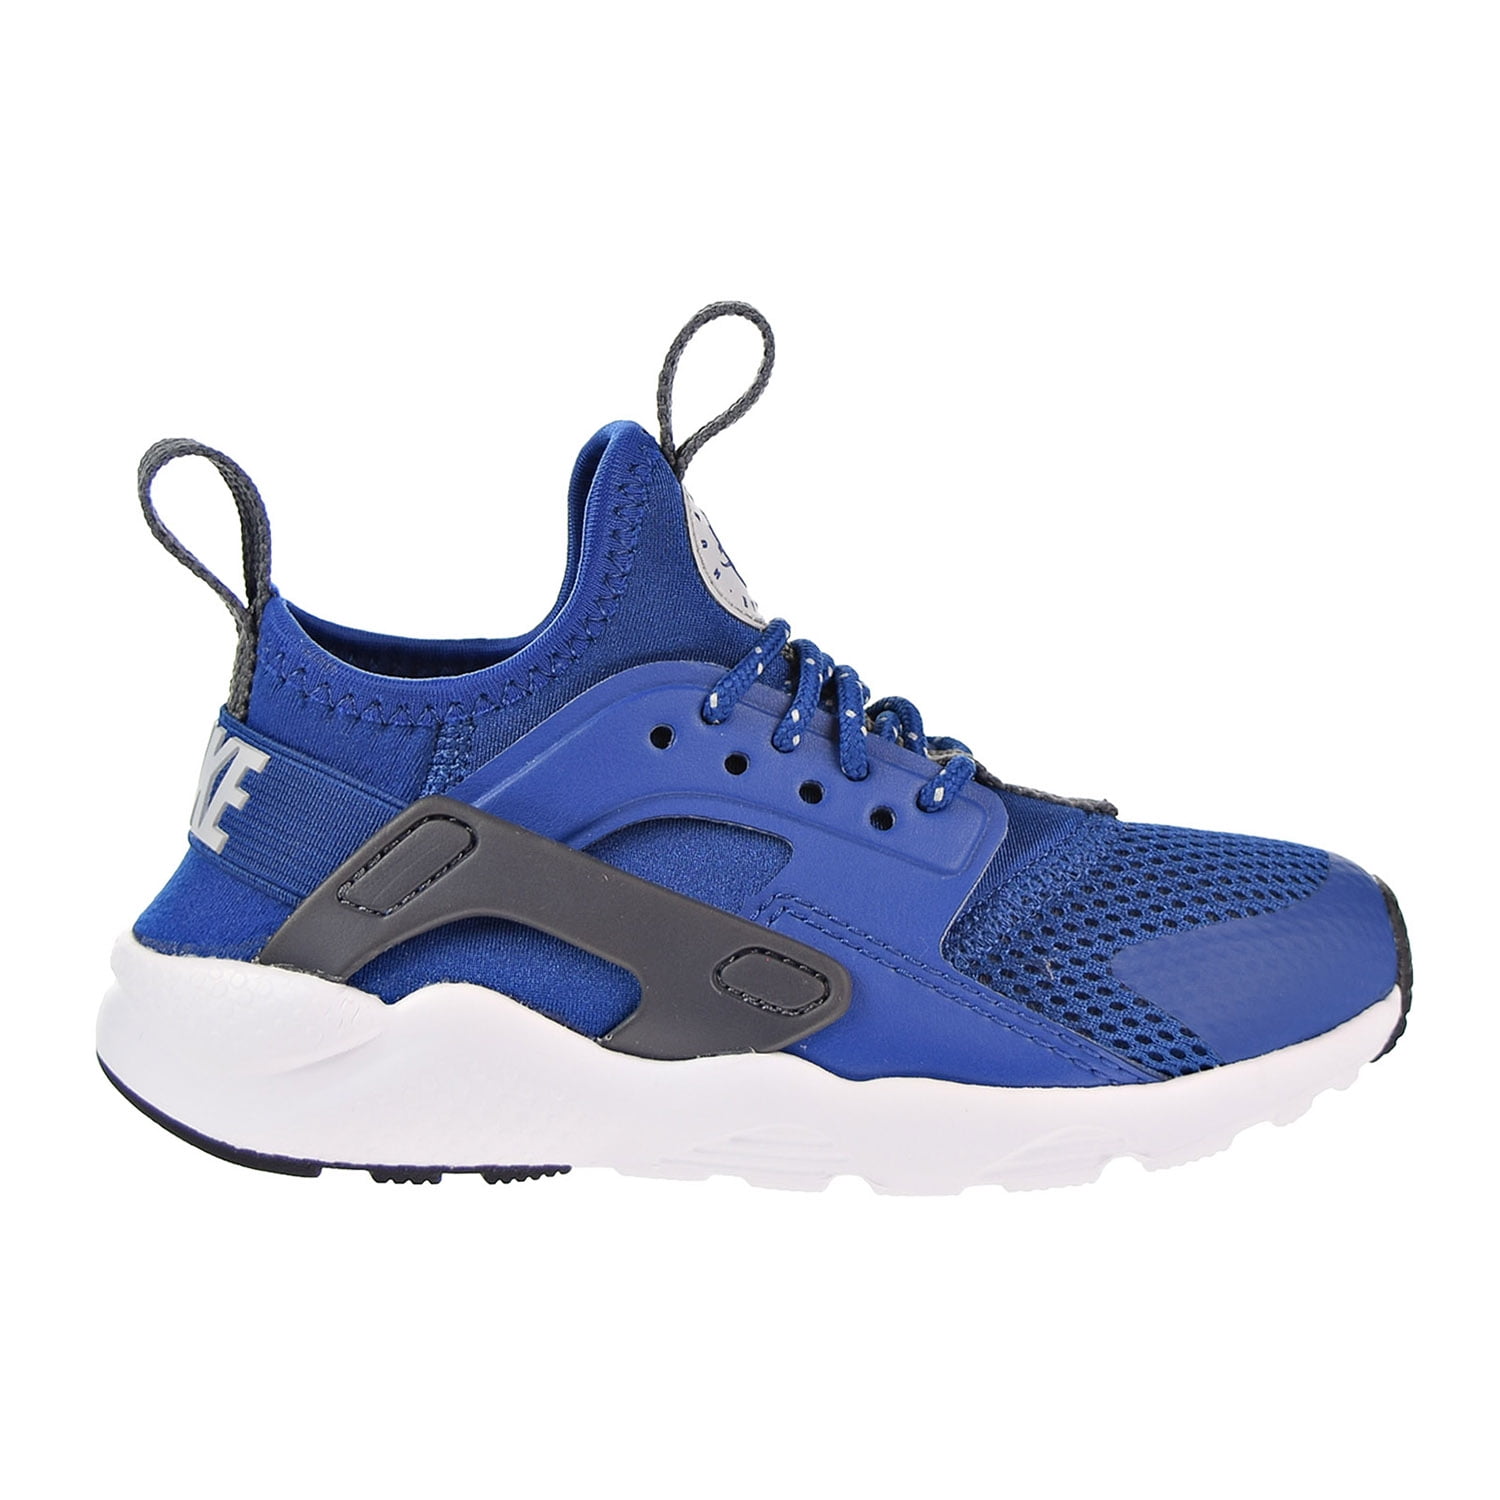 Selskab Bliv oppe Ledig Nike Huarache Run Ultra Little Kids' Shoes Gym Blue/Wolf Grey/White  859593-408 - Walmart.com